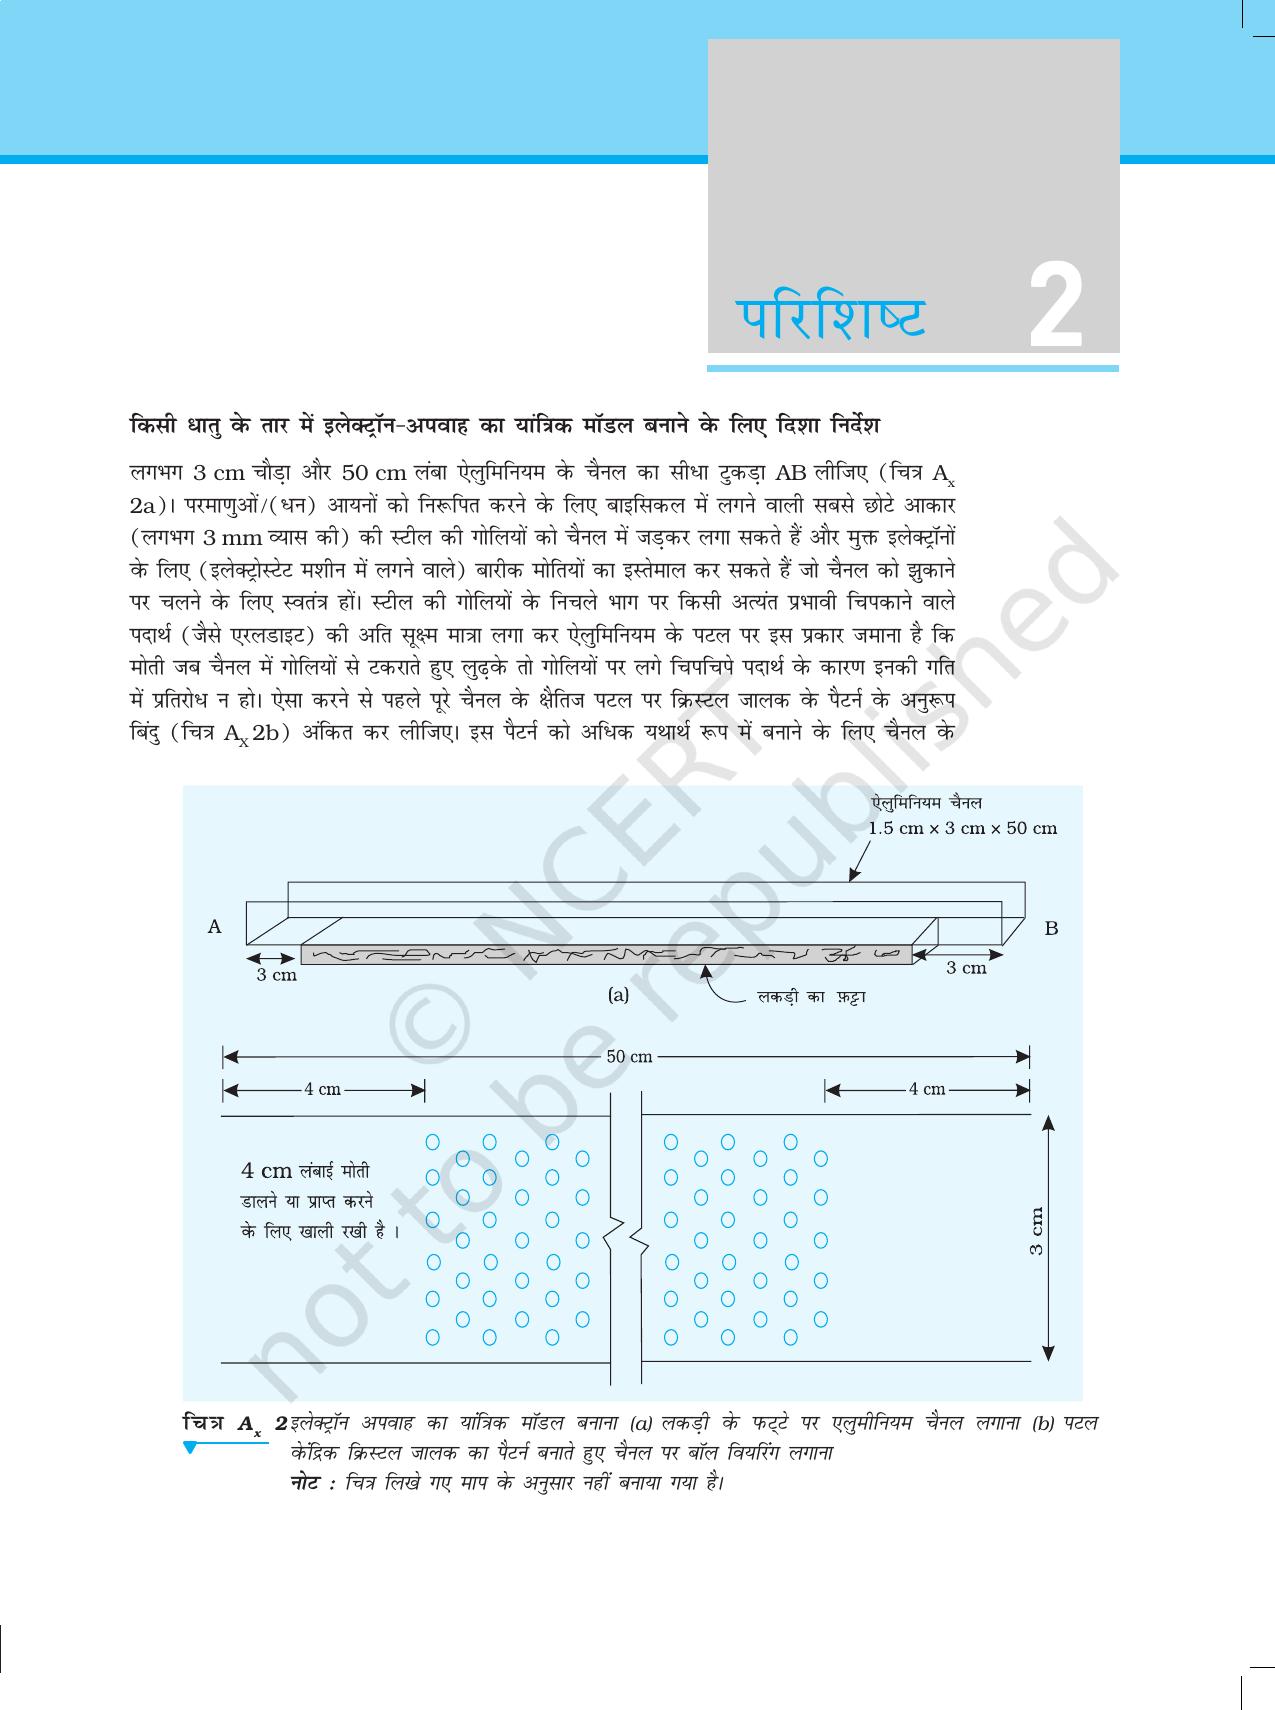 NCERT Laboratory Manuals for Class XII भौतिकी - परिशिष्ट - Page 2